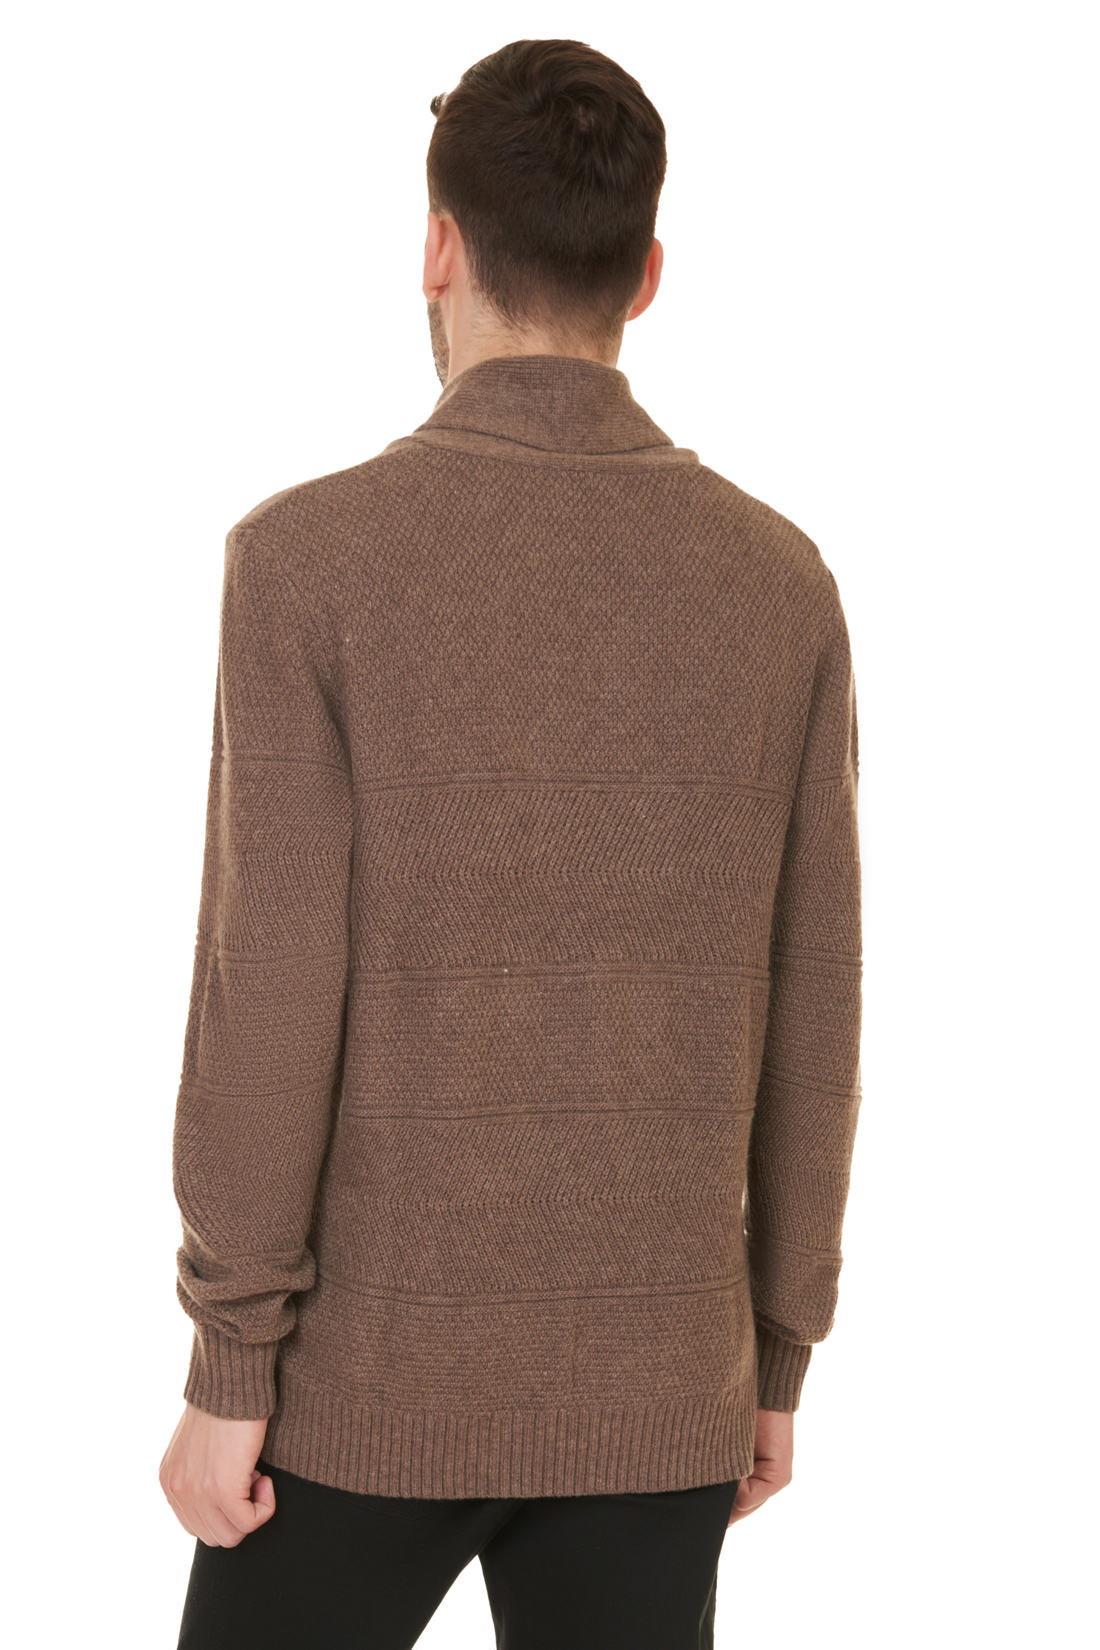 Джемпер с шалевым воротником (арт. baon B637502), размер L, цвет stone melange#коричневый Джемпер с шалевым воротником (арт. baon B637502) - фото 2